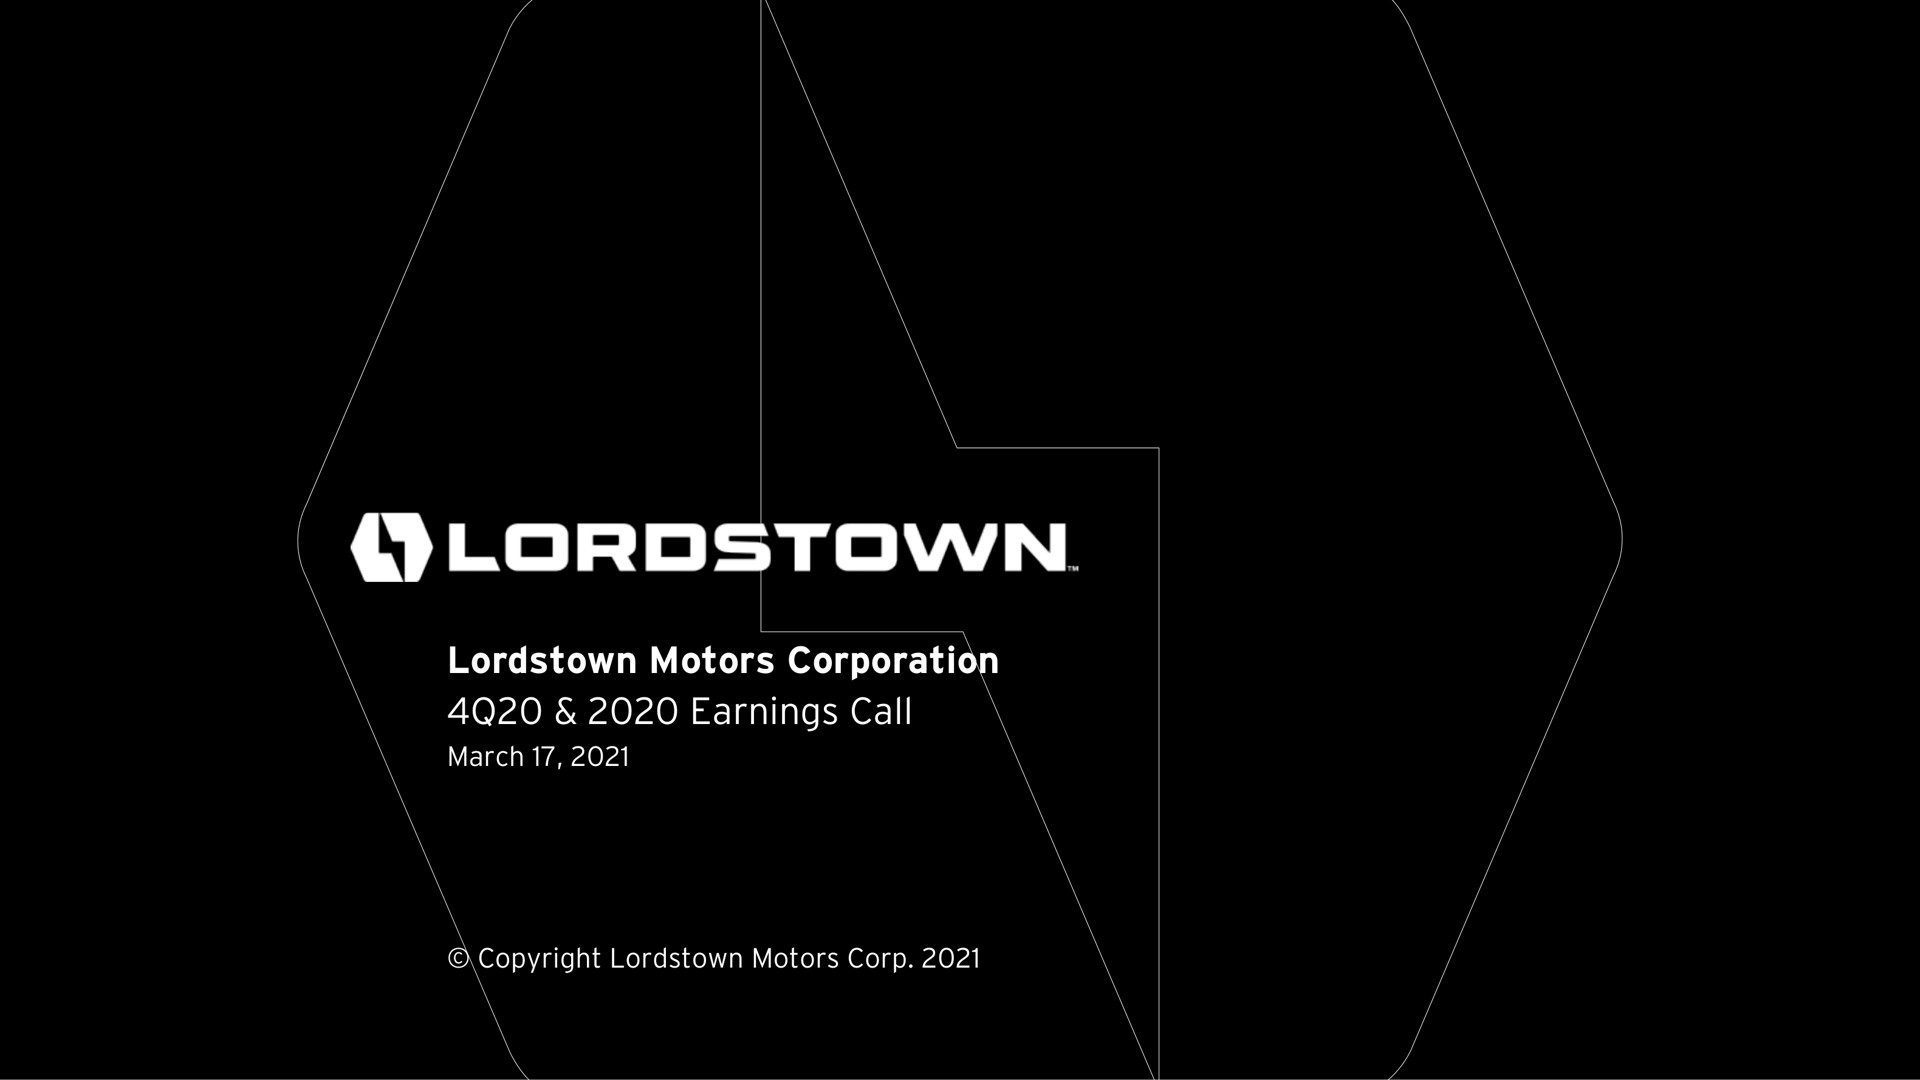 motors corporation earnings call march copyright motors corp | Lordstown Motors